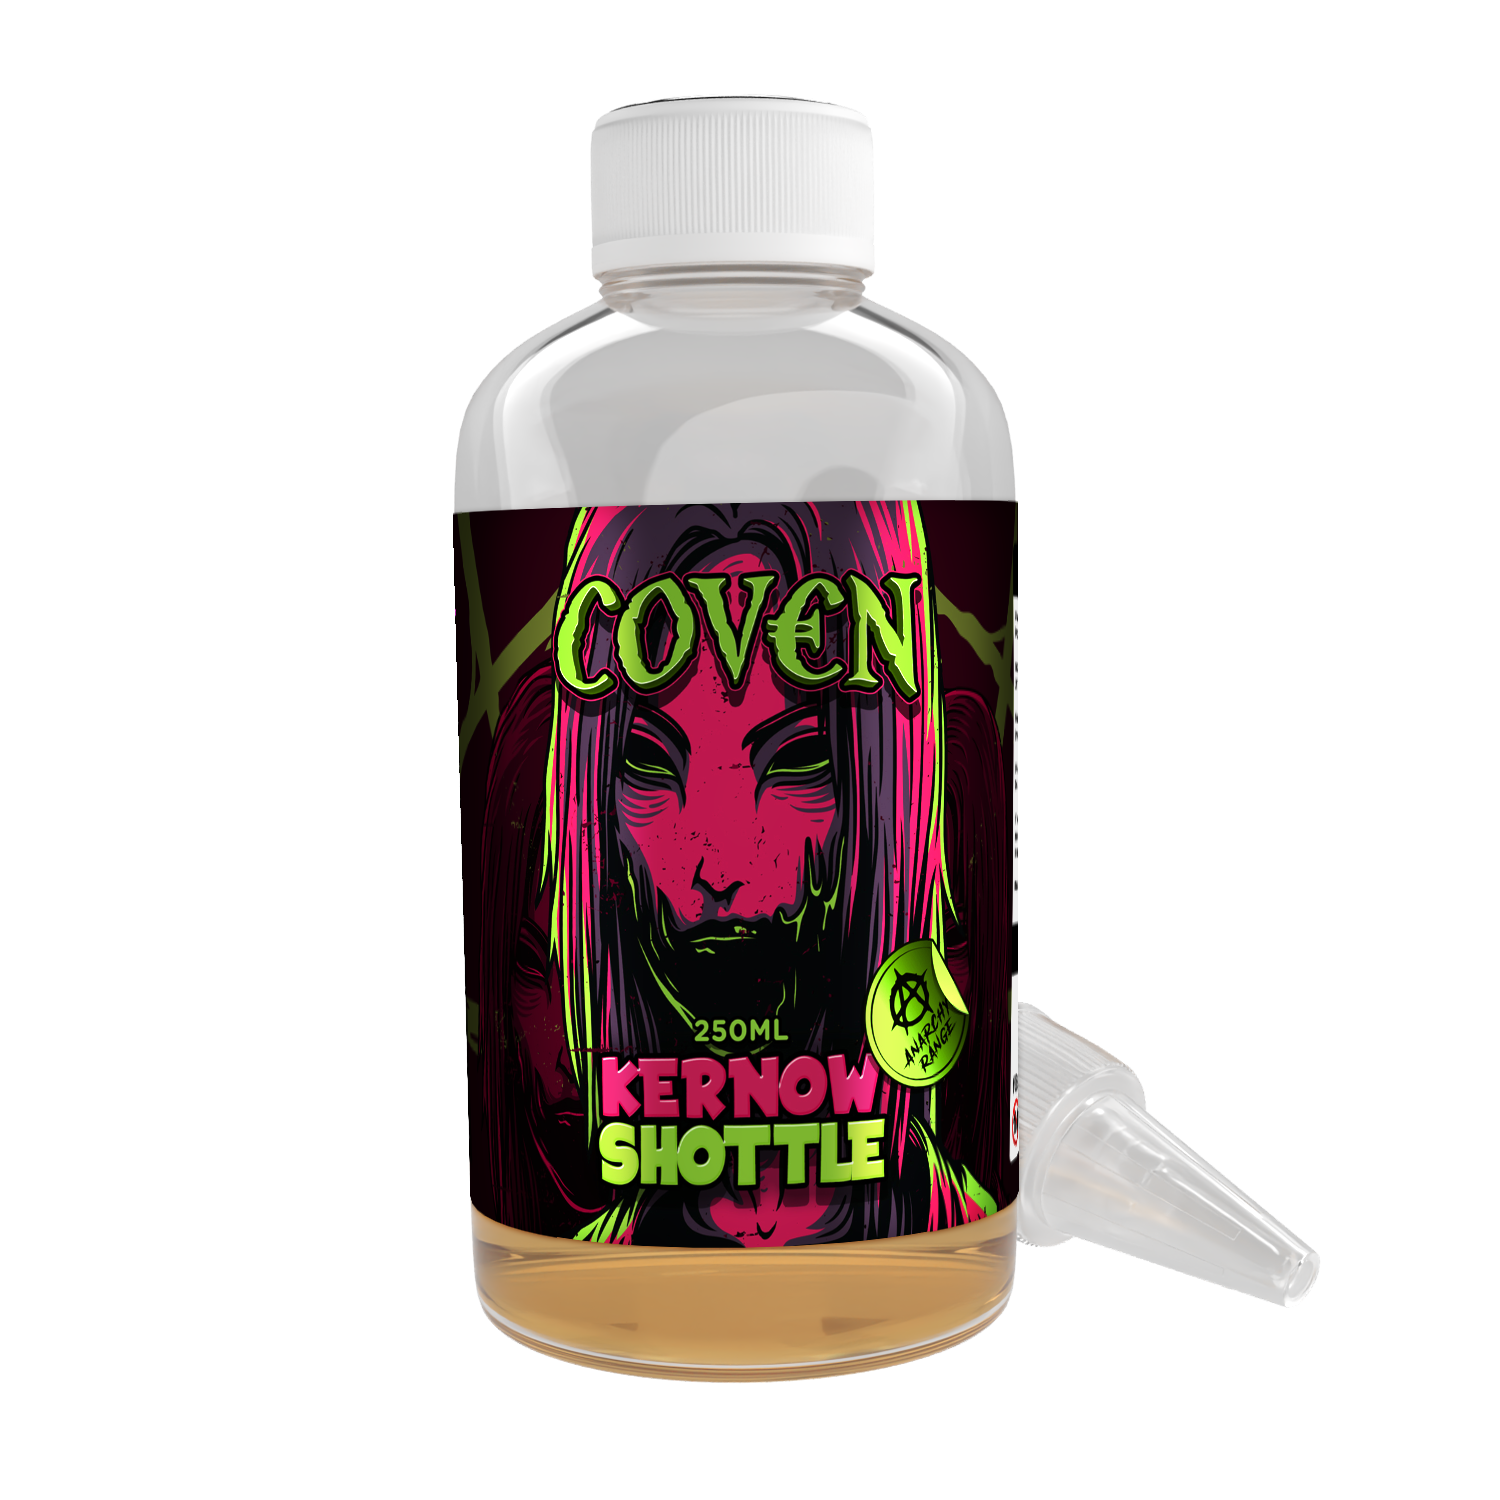 Coven Shottle Flavour Shot by Kernow - 250ml